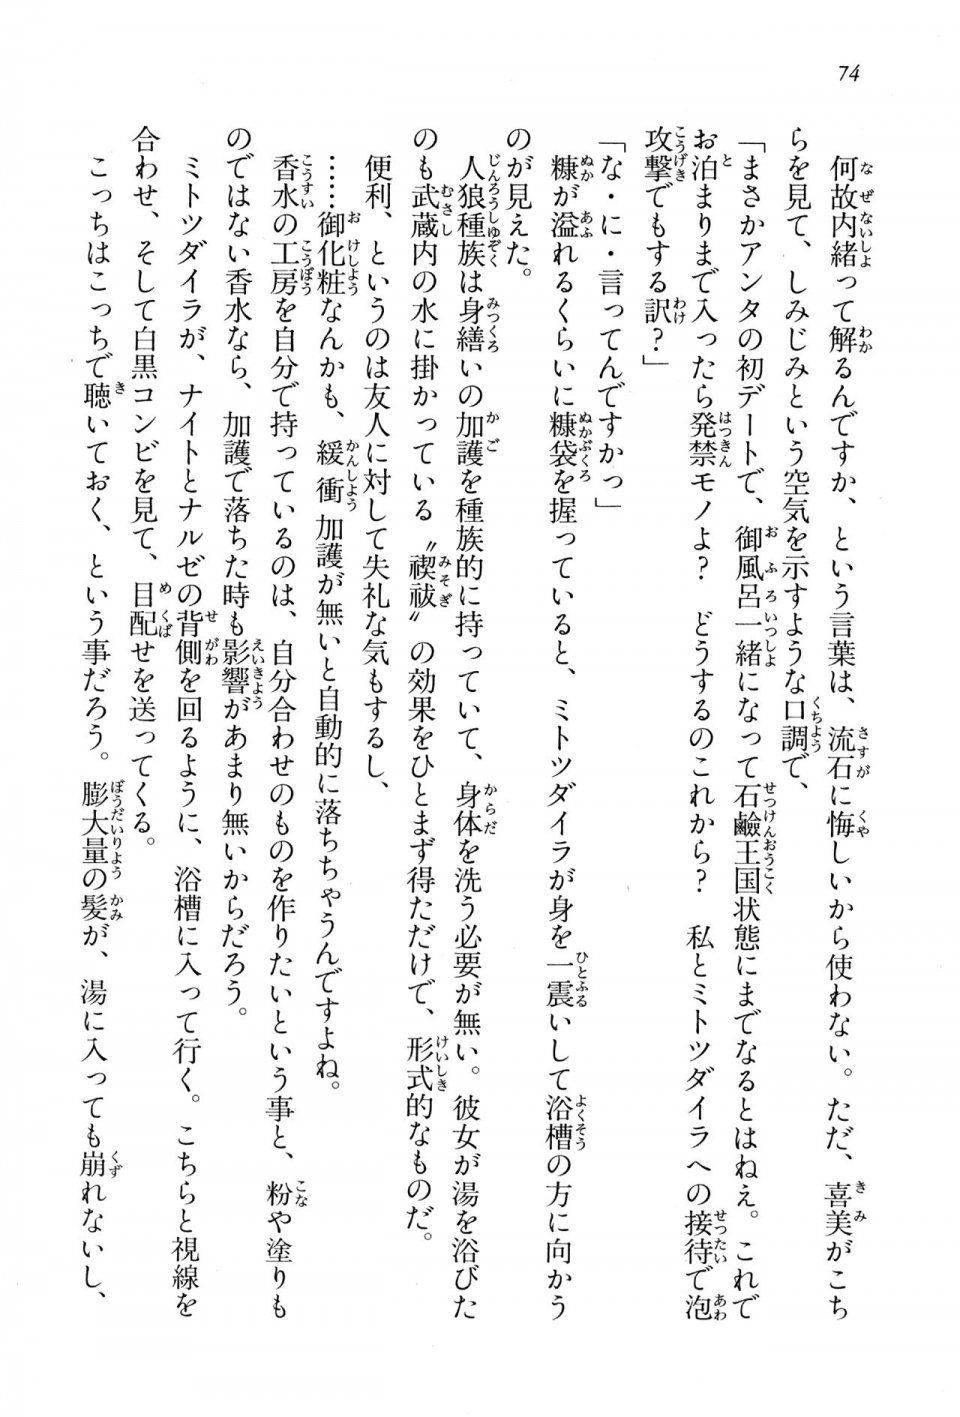 Kyoukai Senjou no Horizon BD Special Mininovel Vol 3(2A) - Photo #78